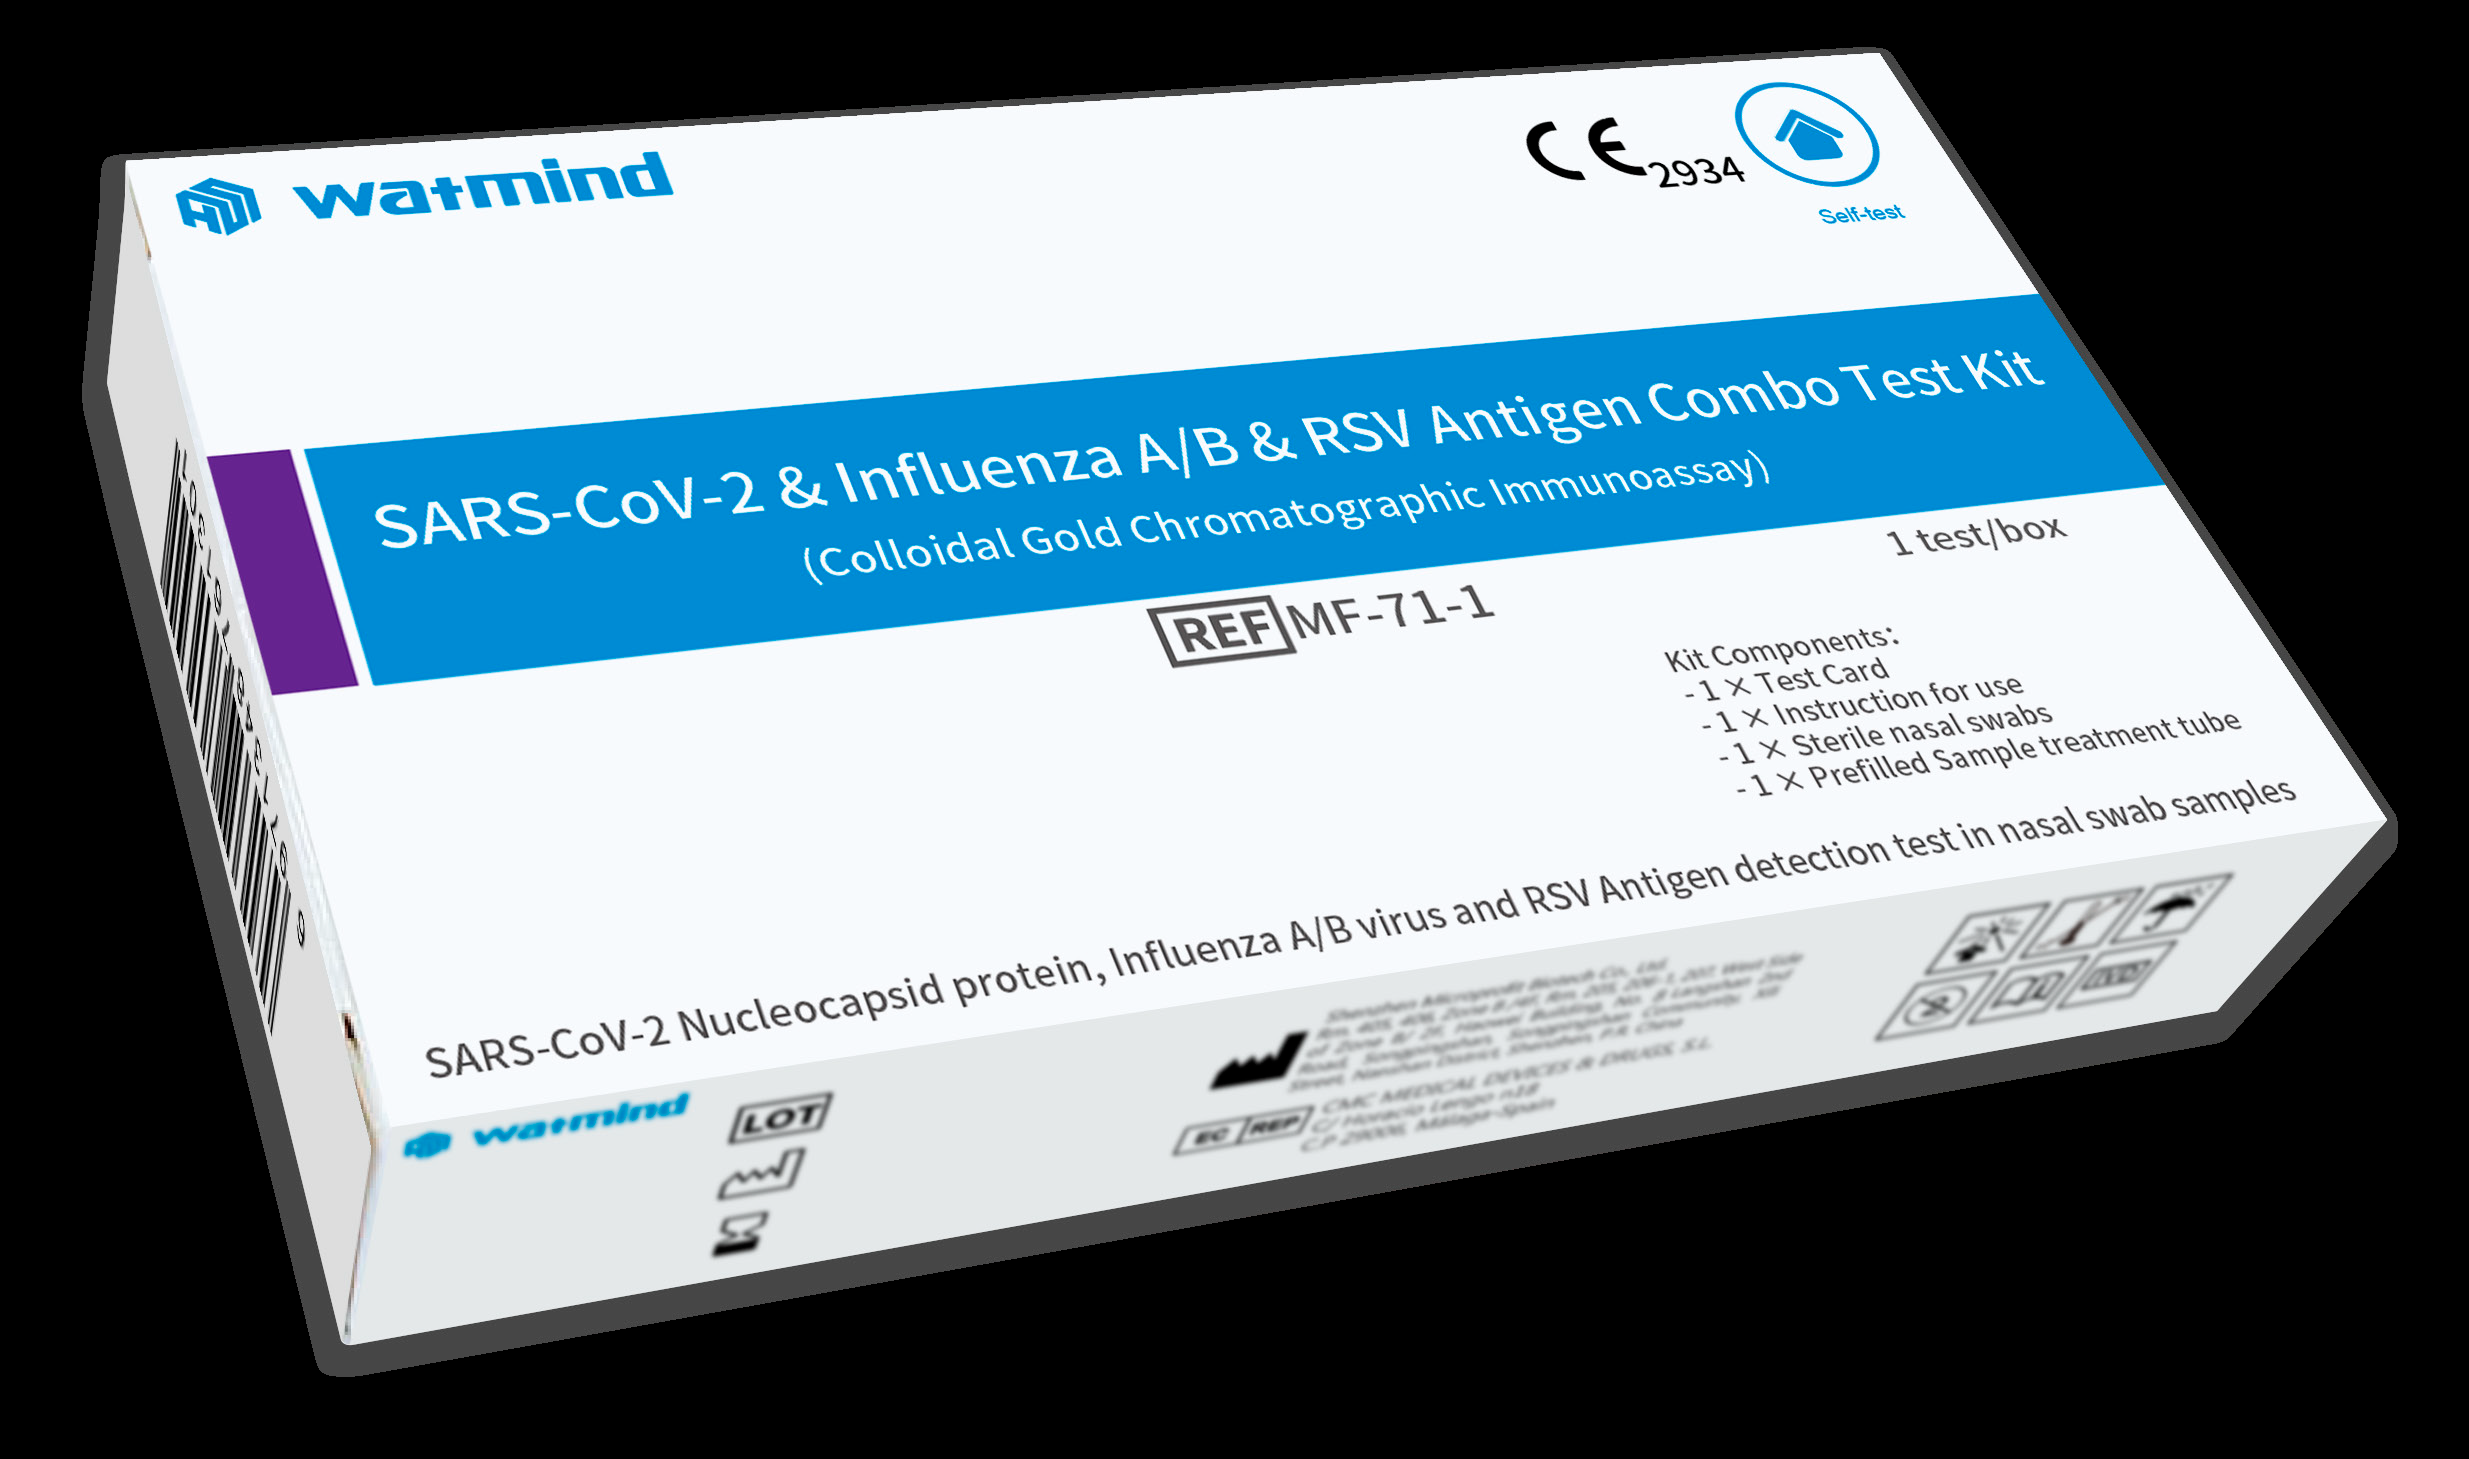 SARS-CoV-2 & Influenza A/B & RSV-Antigen-Kombi-Test (1er Packung) 